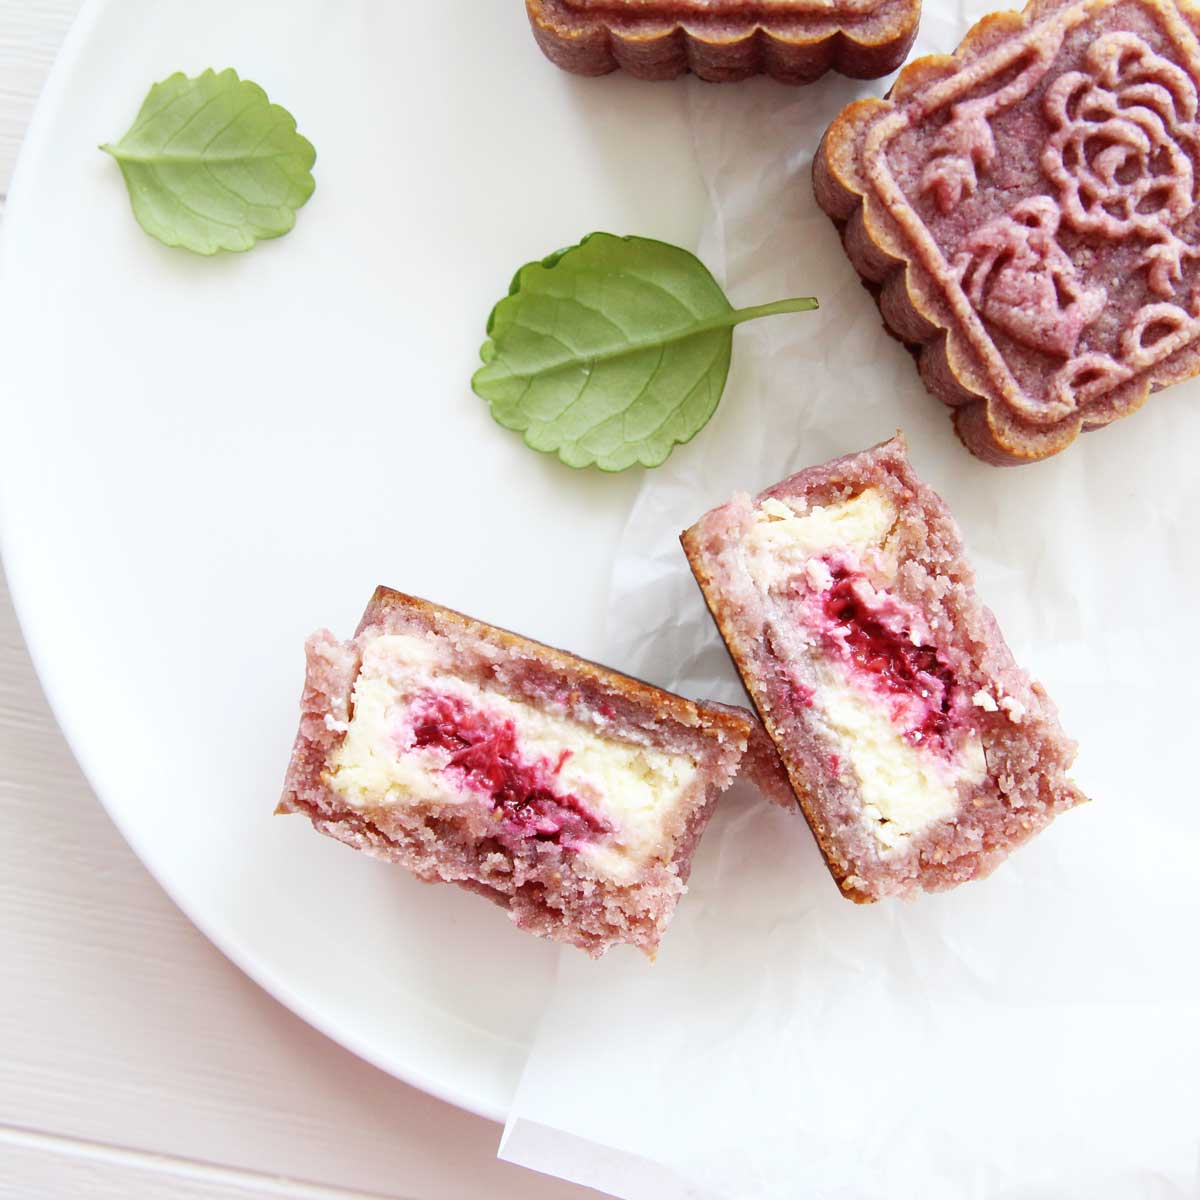 Sweet Raspberry Cheesecake Mooncakes Recipe (Simple, Gluten Free) - Zero-Sugar Whipped Cream